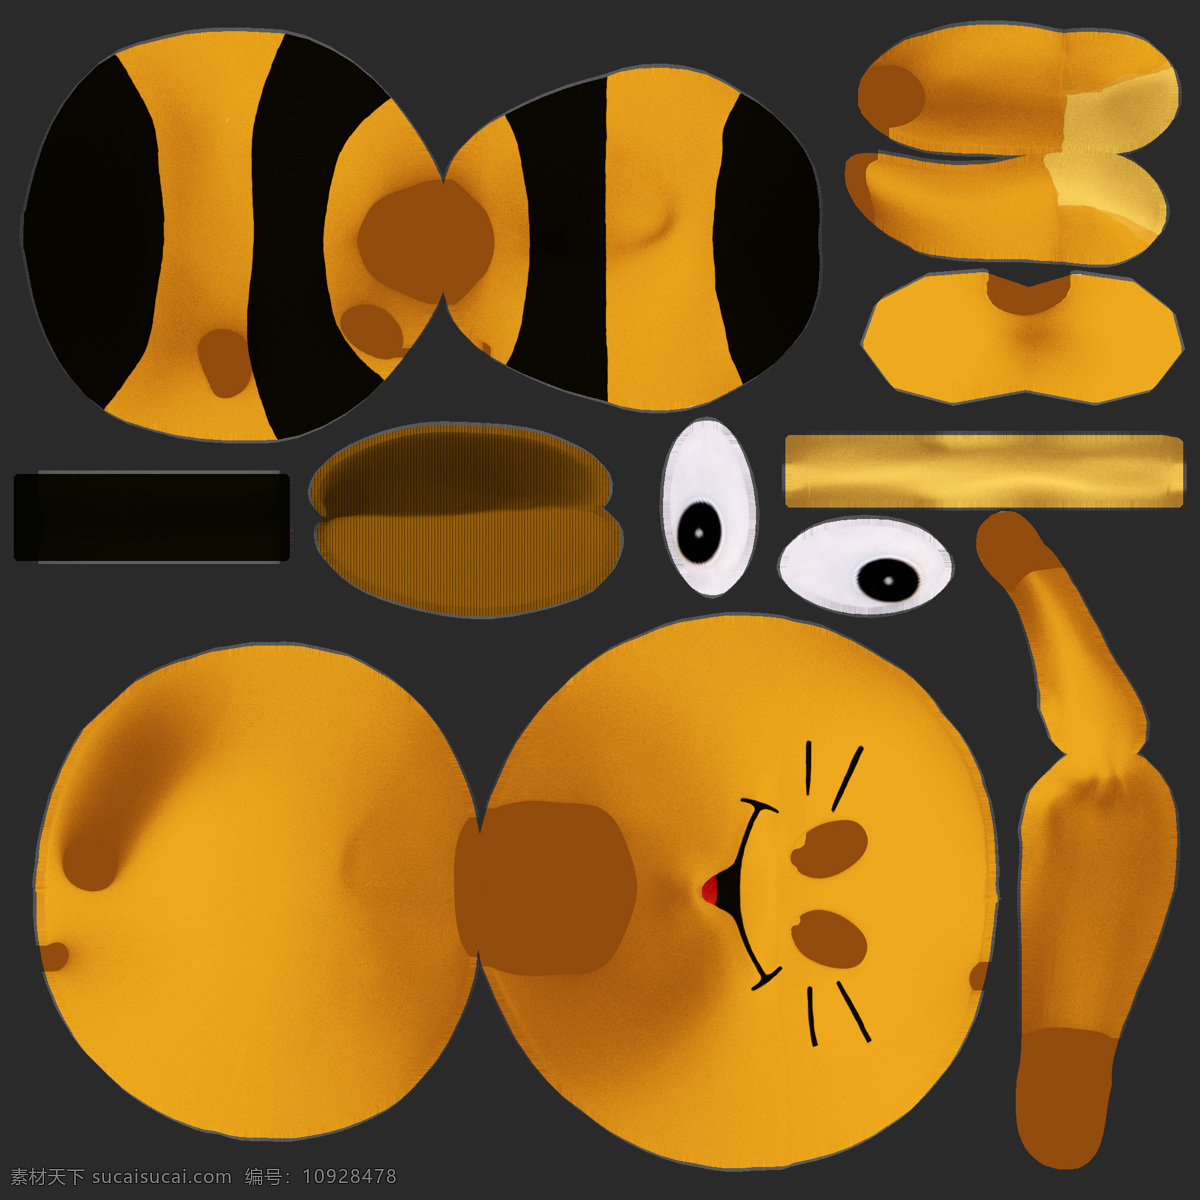 3d设计模型 max 动物 儿童用品 毛绒玩具 蜜蜂 模型 室内模型 玩具 源文件 蜜蜂素材下载 蜜蜂模板下载 毛茸茸 动物玩具 毛绒 儿童玩具 3d模型素材 其他3d模型